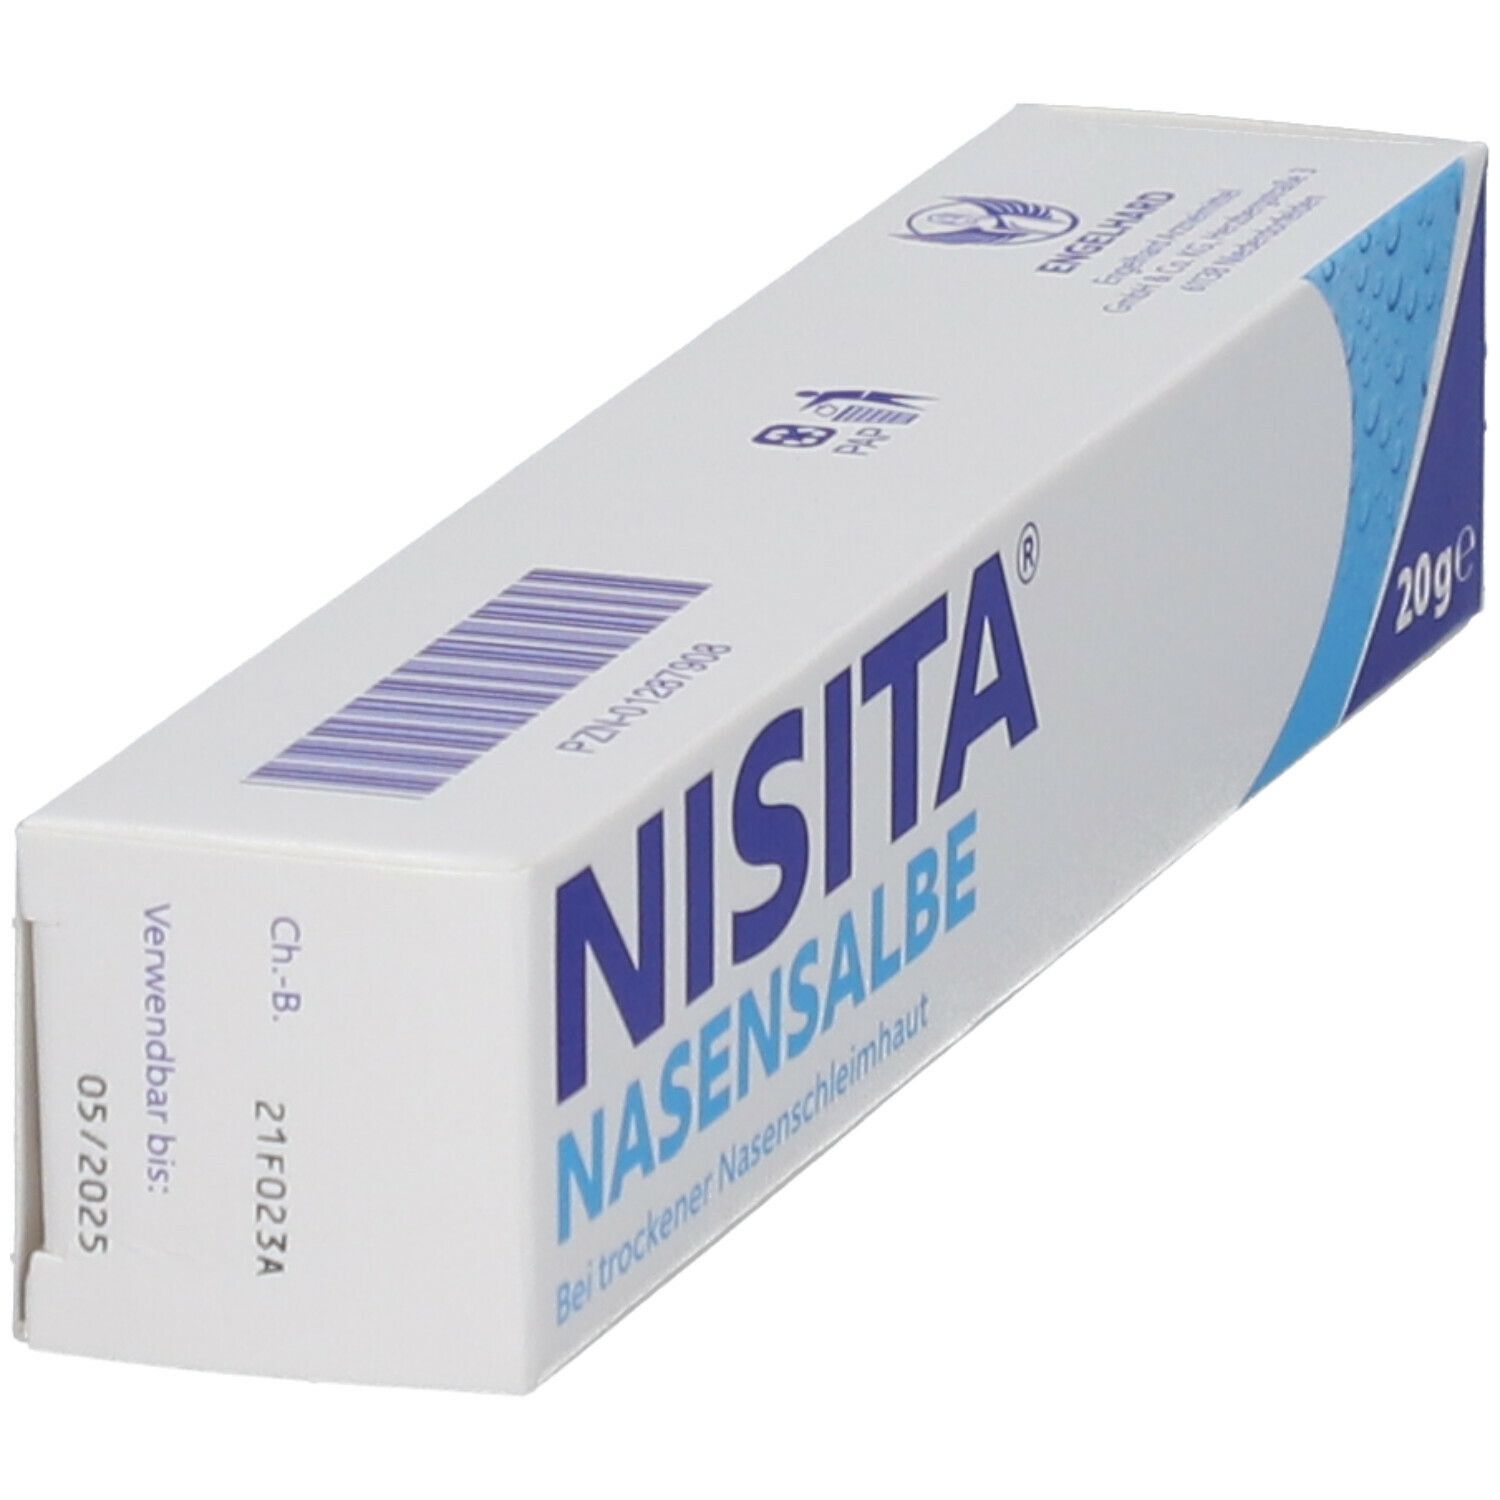 Nisita® Nasensalbe